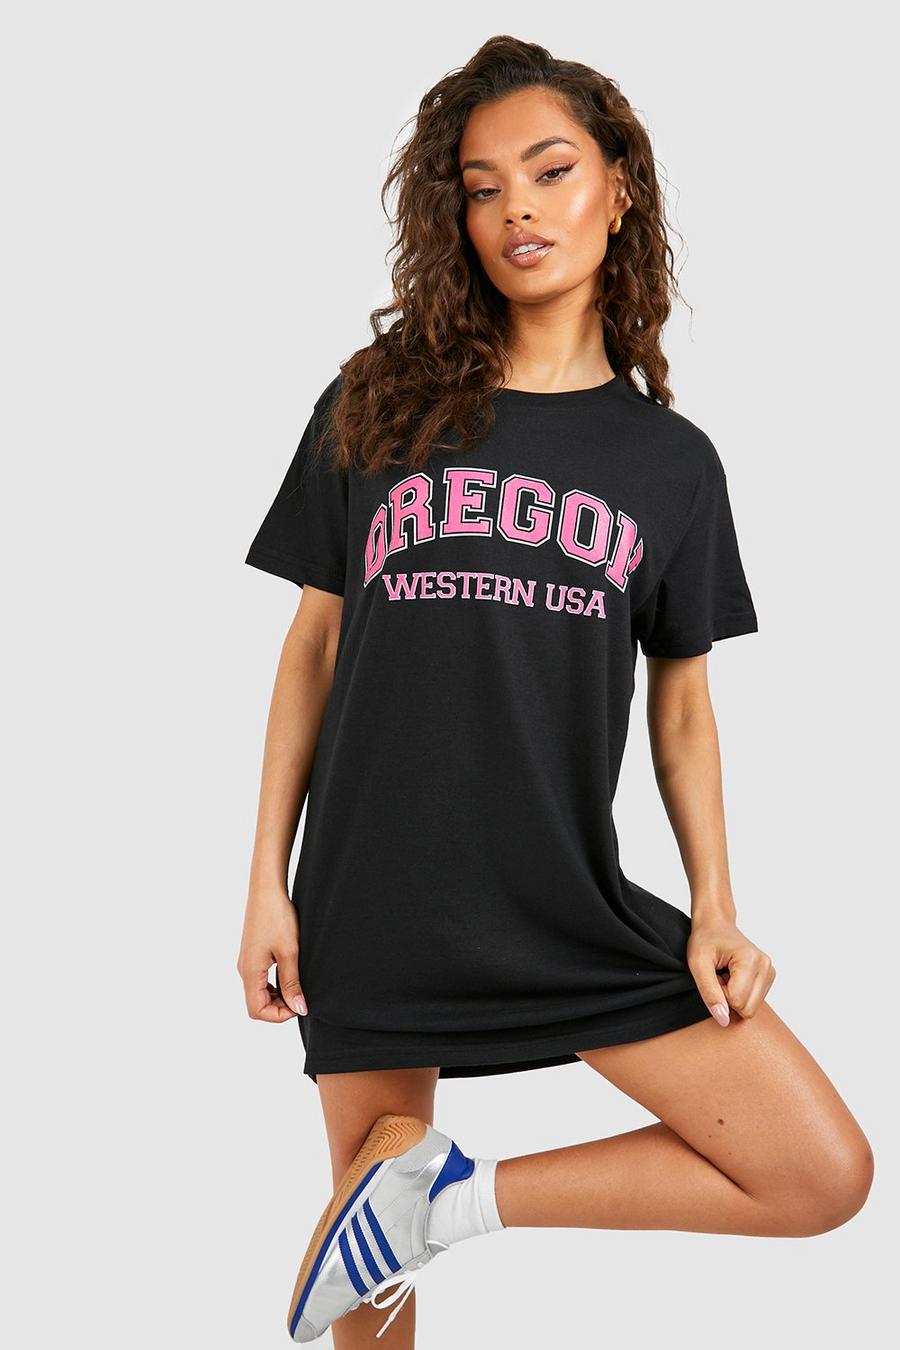 Black Oregon Oversized T-shirt Dress